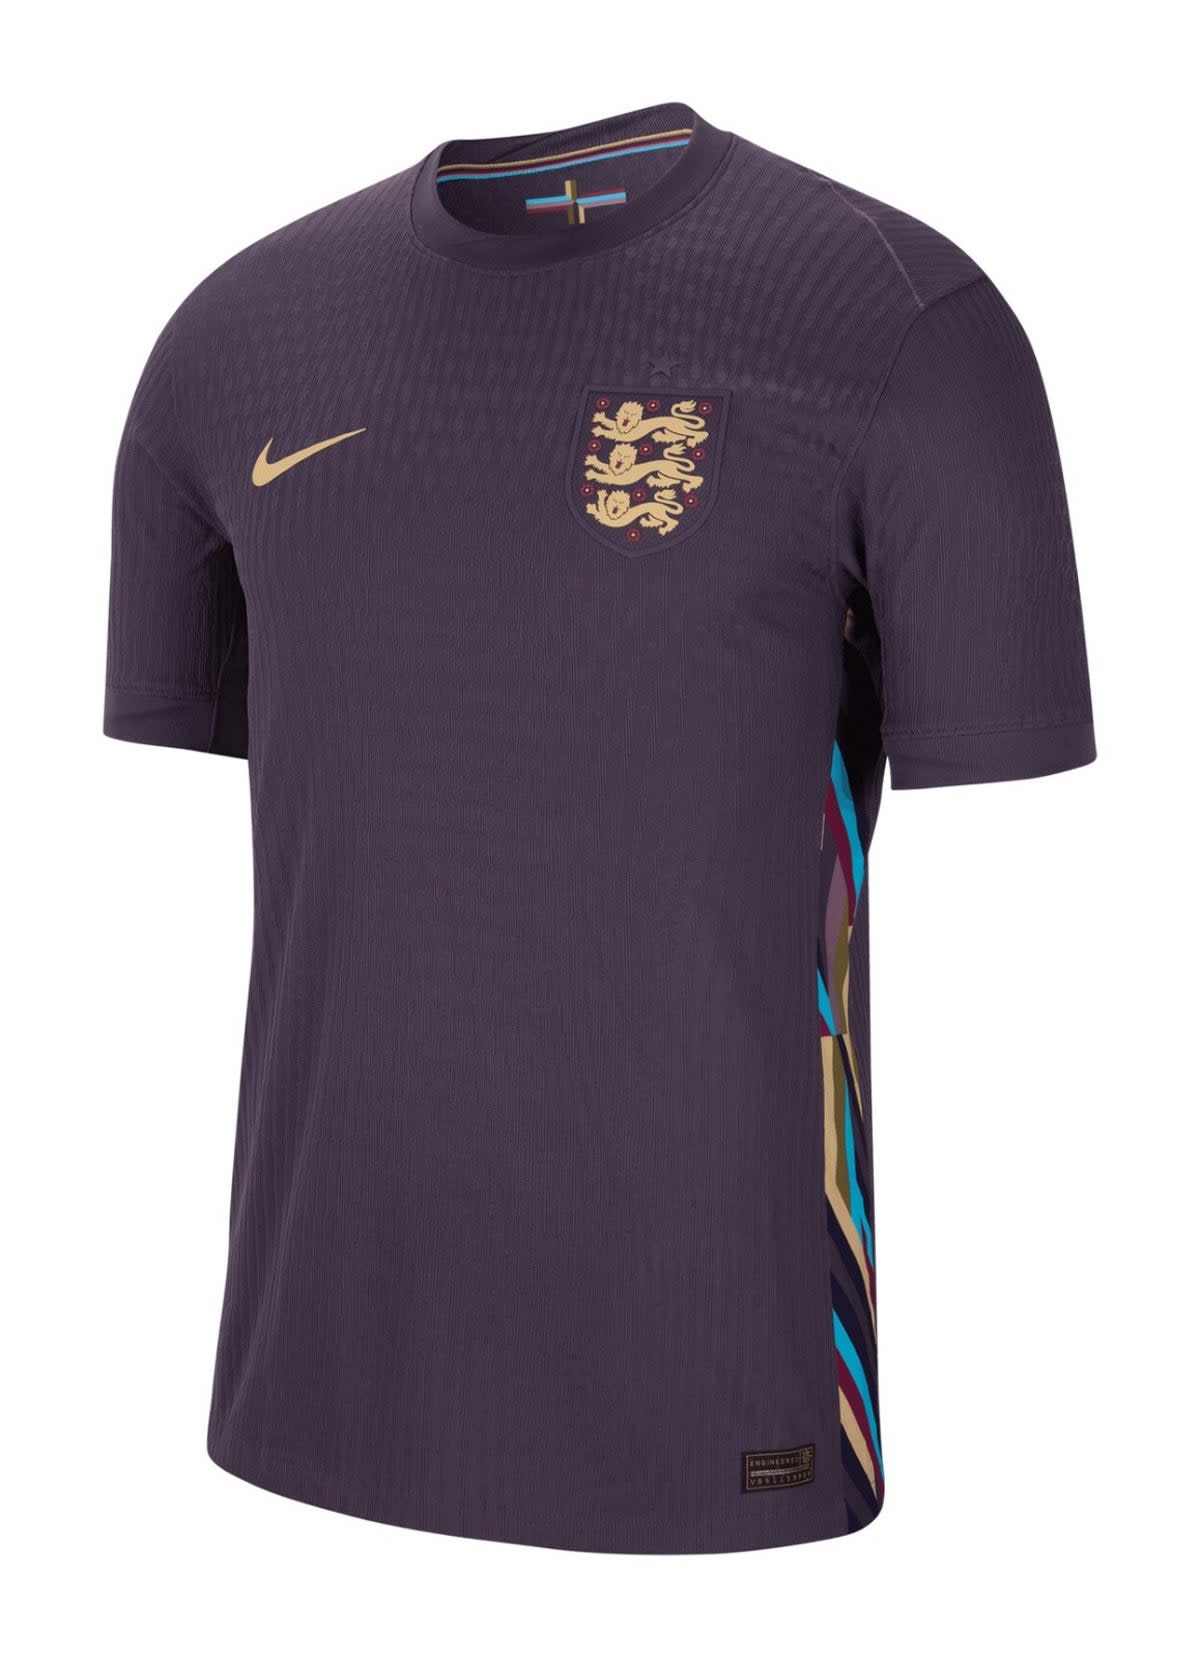 England away (Nike)